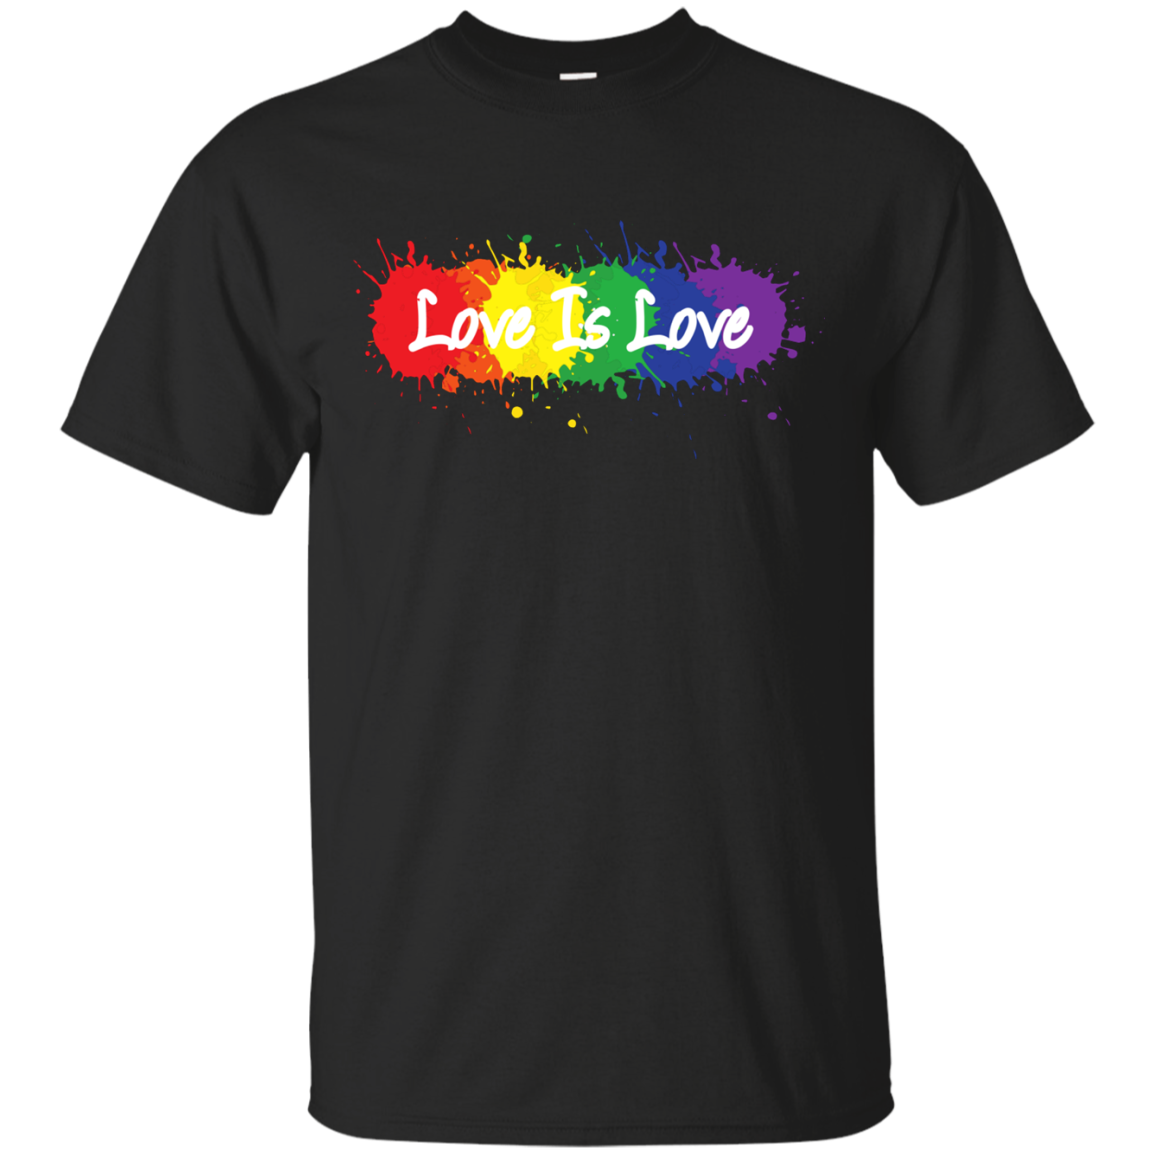  "Love is Love" black T Shirt for men LGBT Pride Equality tshirt for men